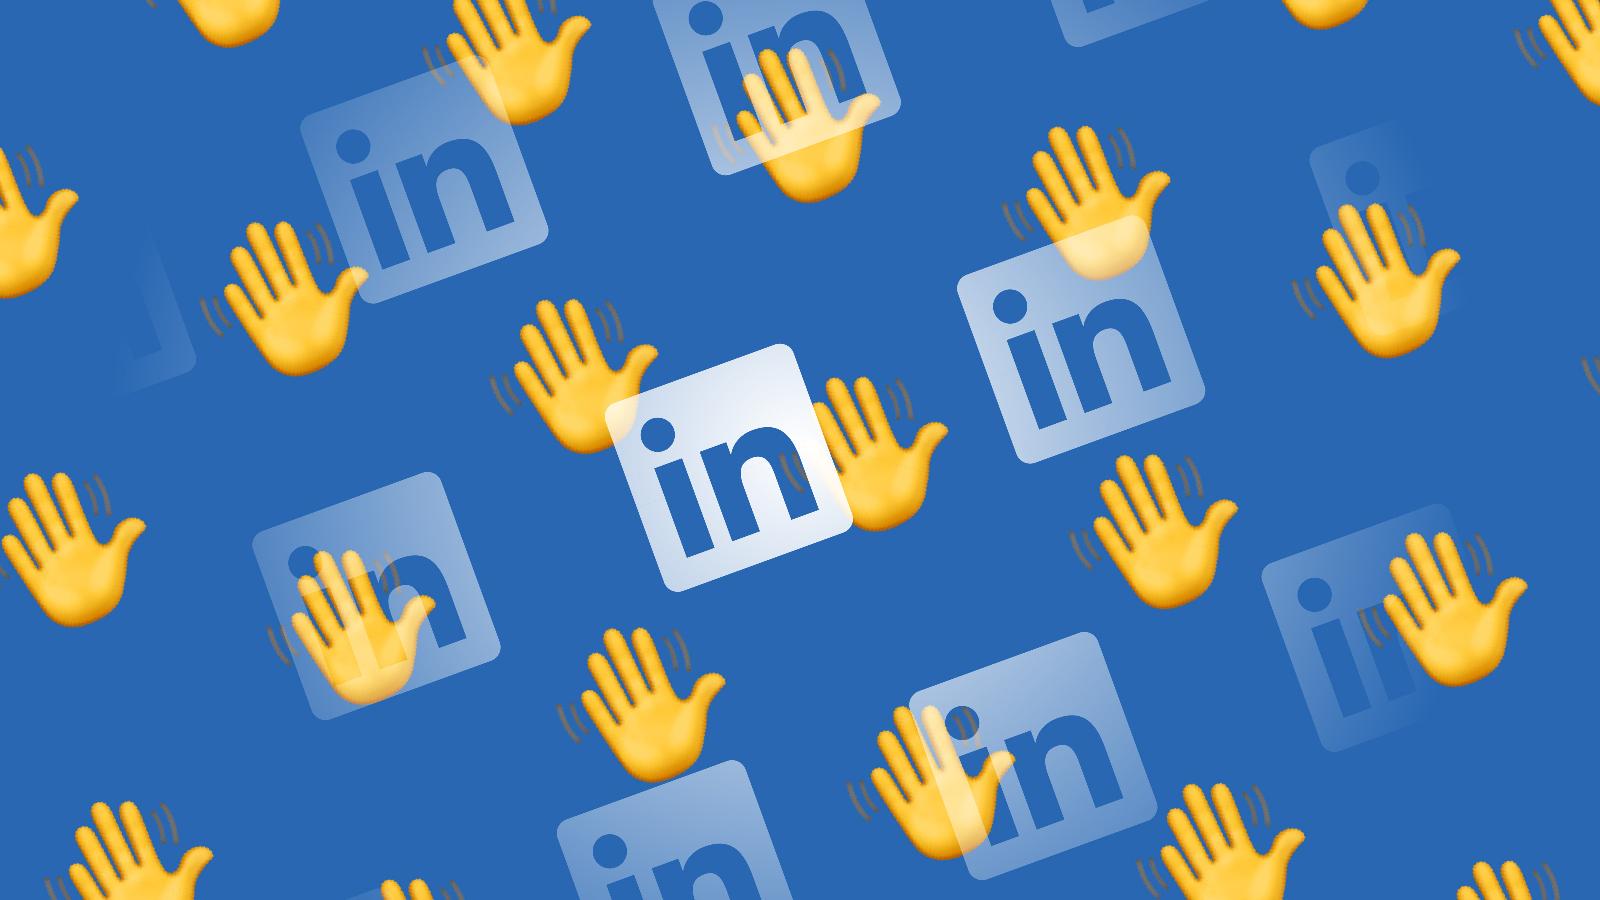 LinkedIn wants a piece of Wordle’s success